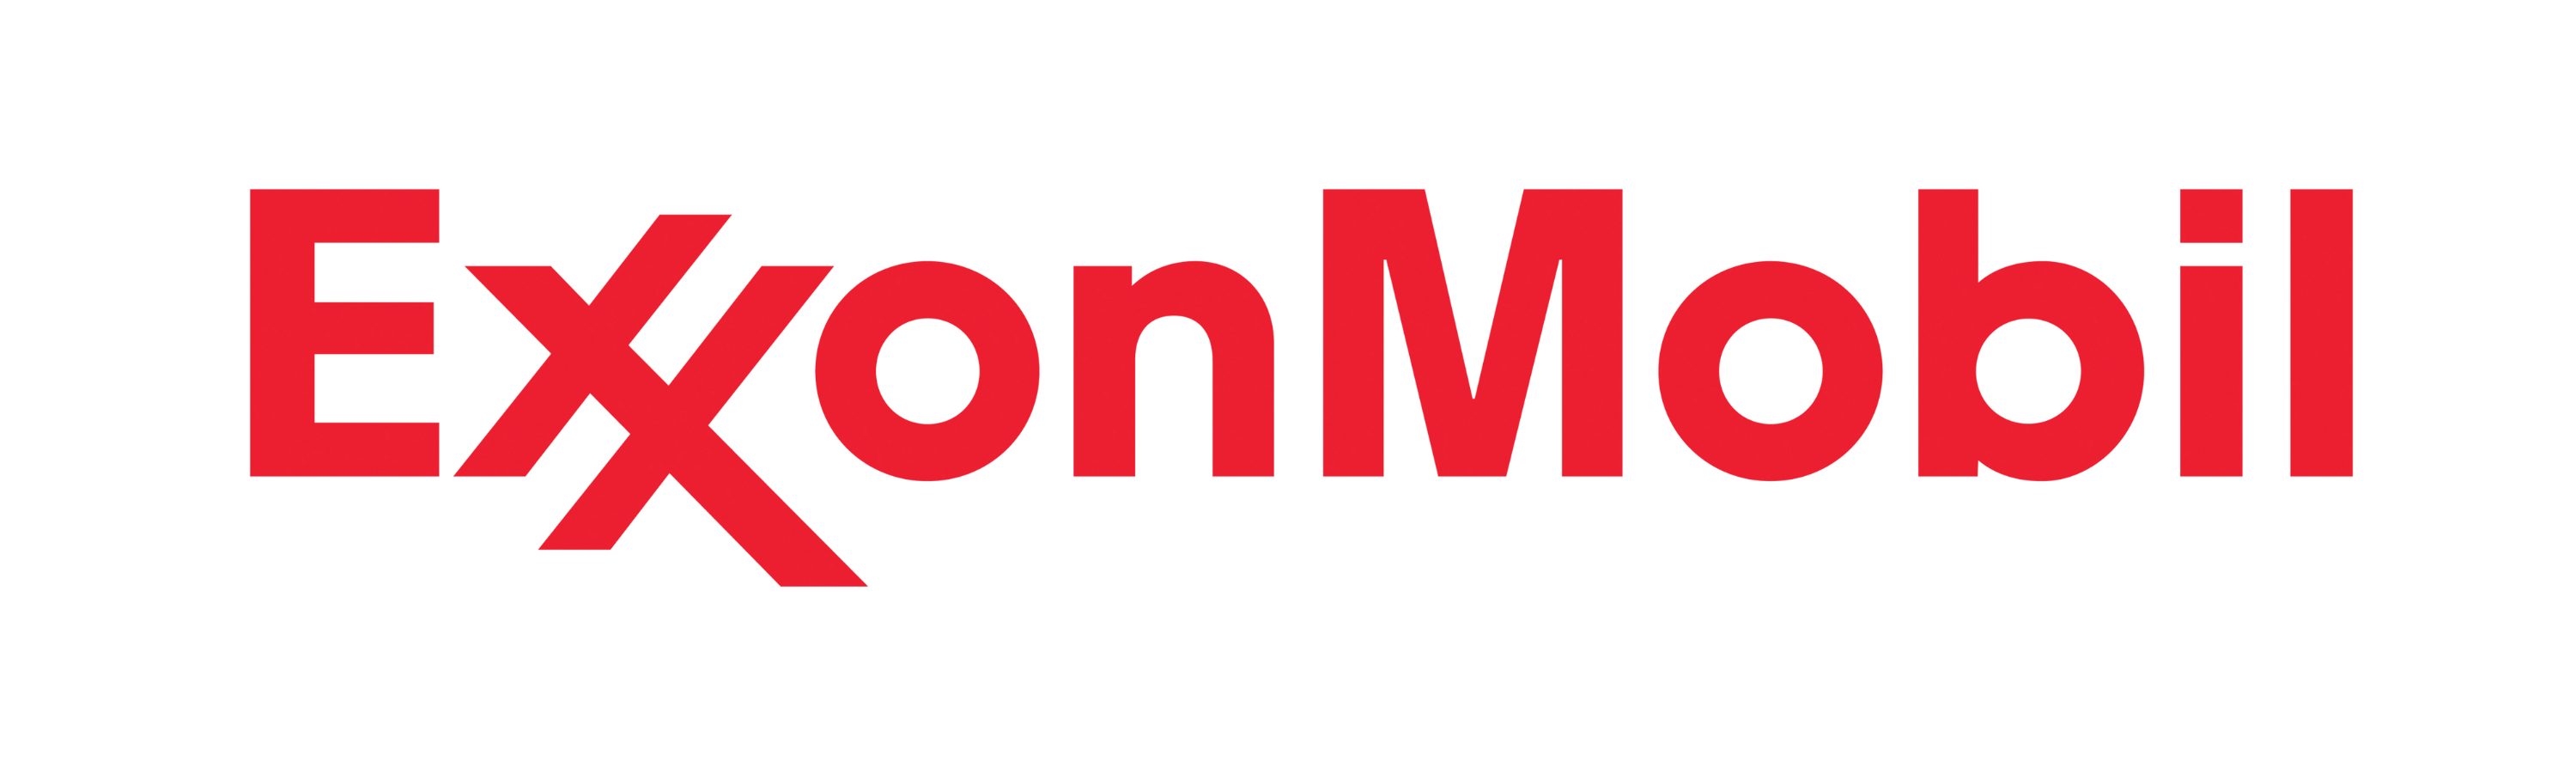 ExxonMobil - Bronze